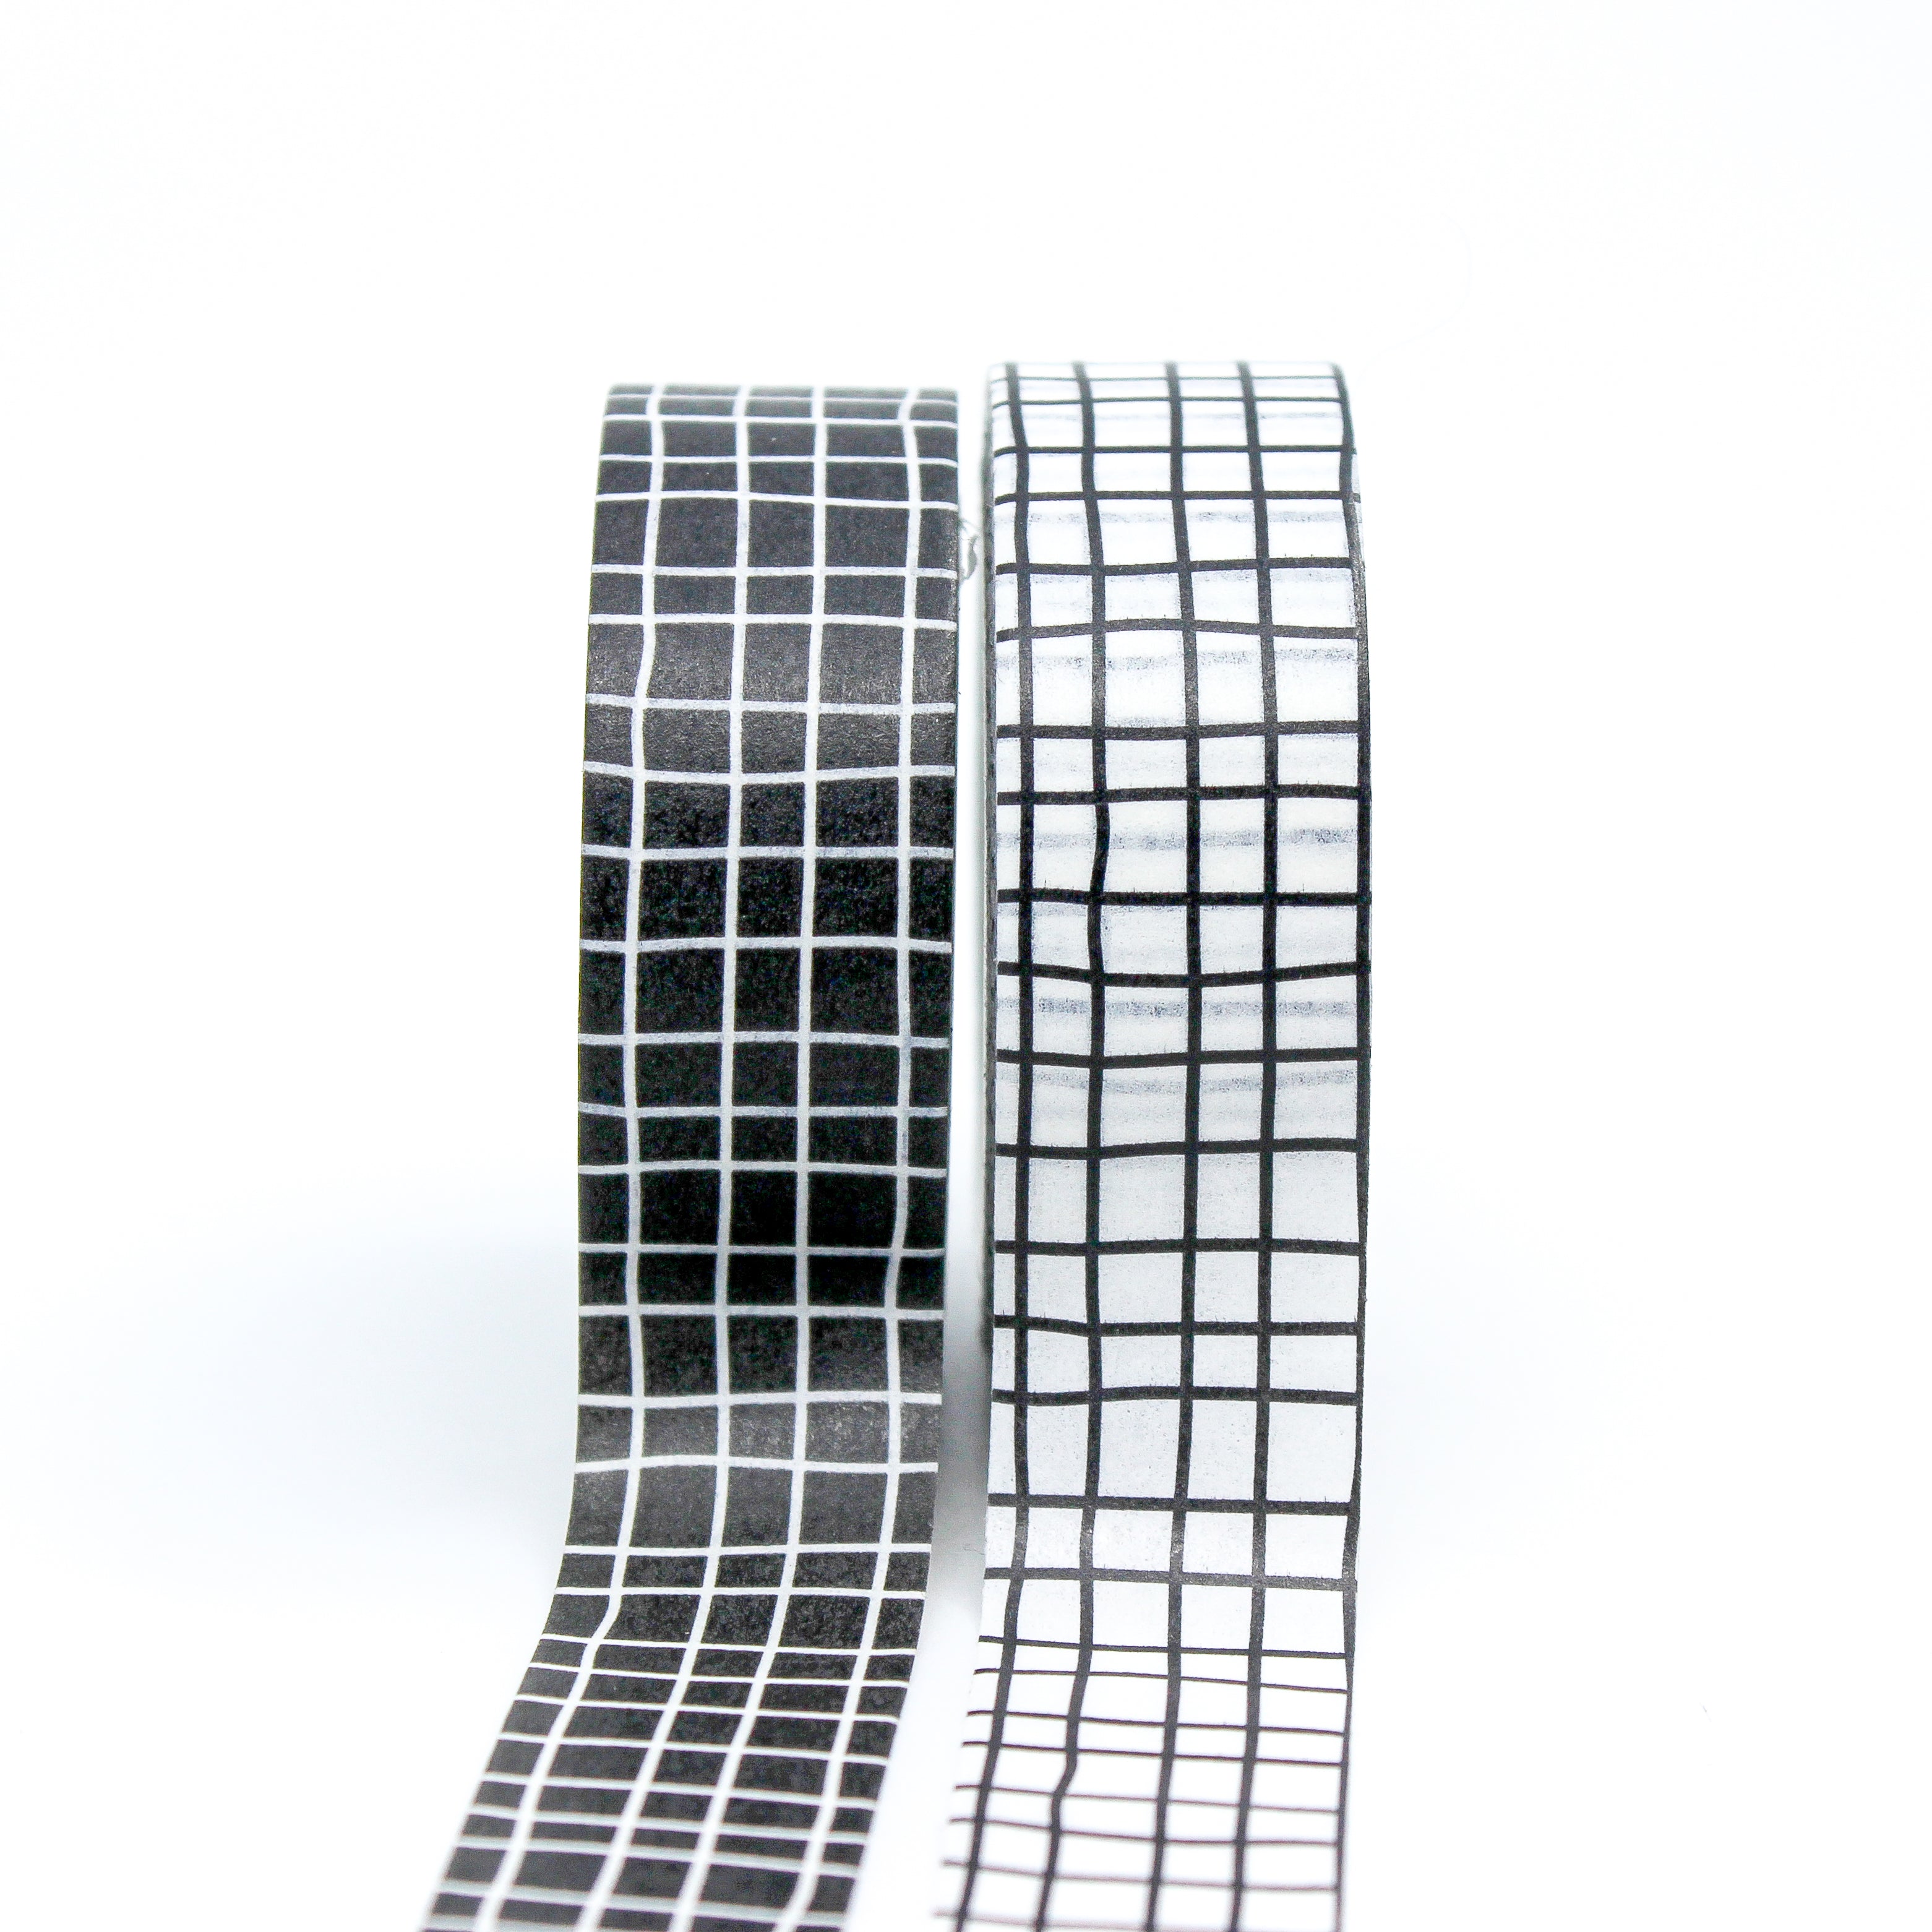 1set/2pcs Simple Plaid Designed Washi Tape For Journaling